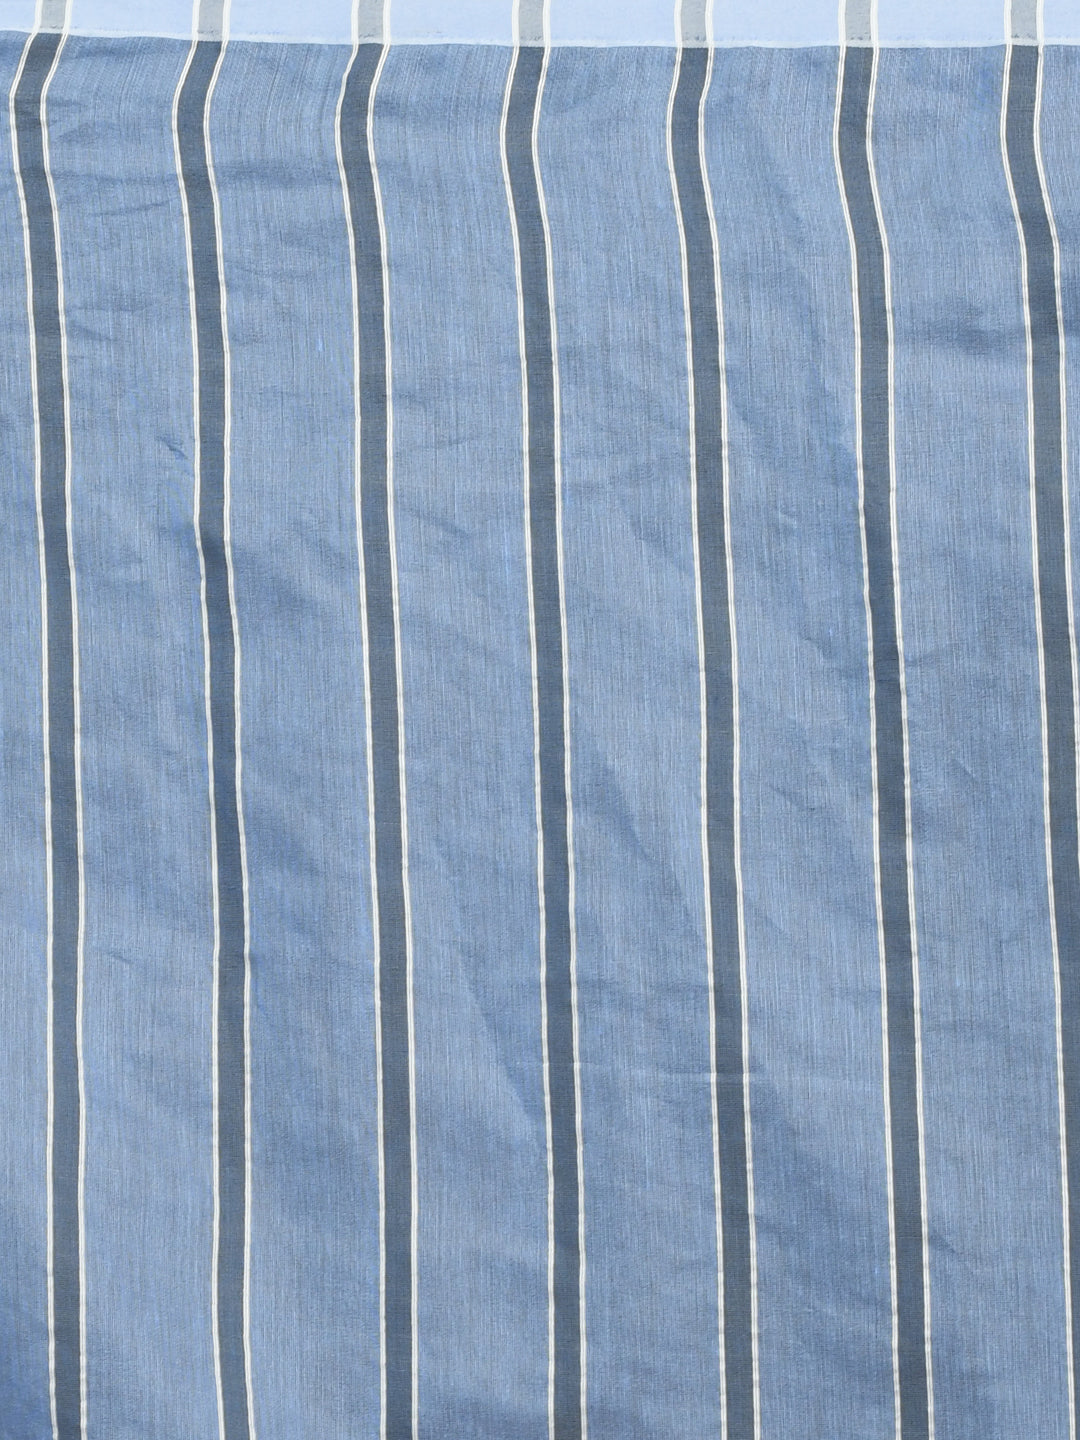 Blue Striped Daily Wear  Saree